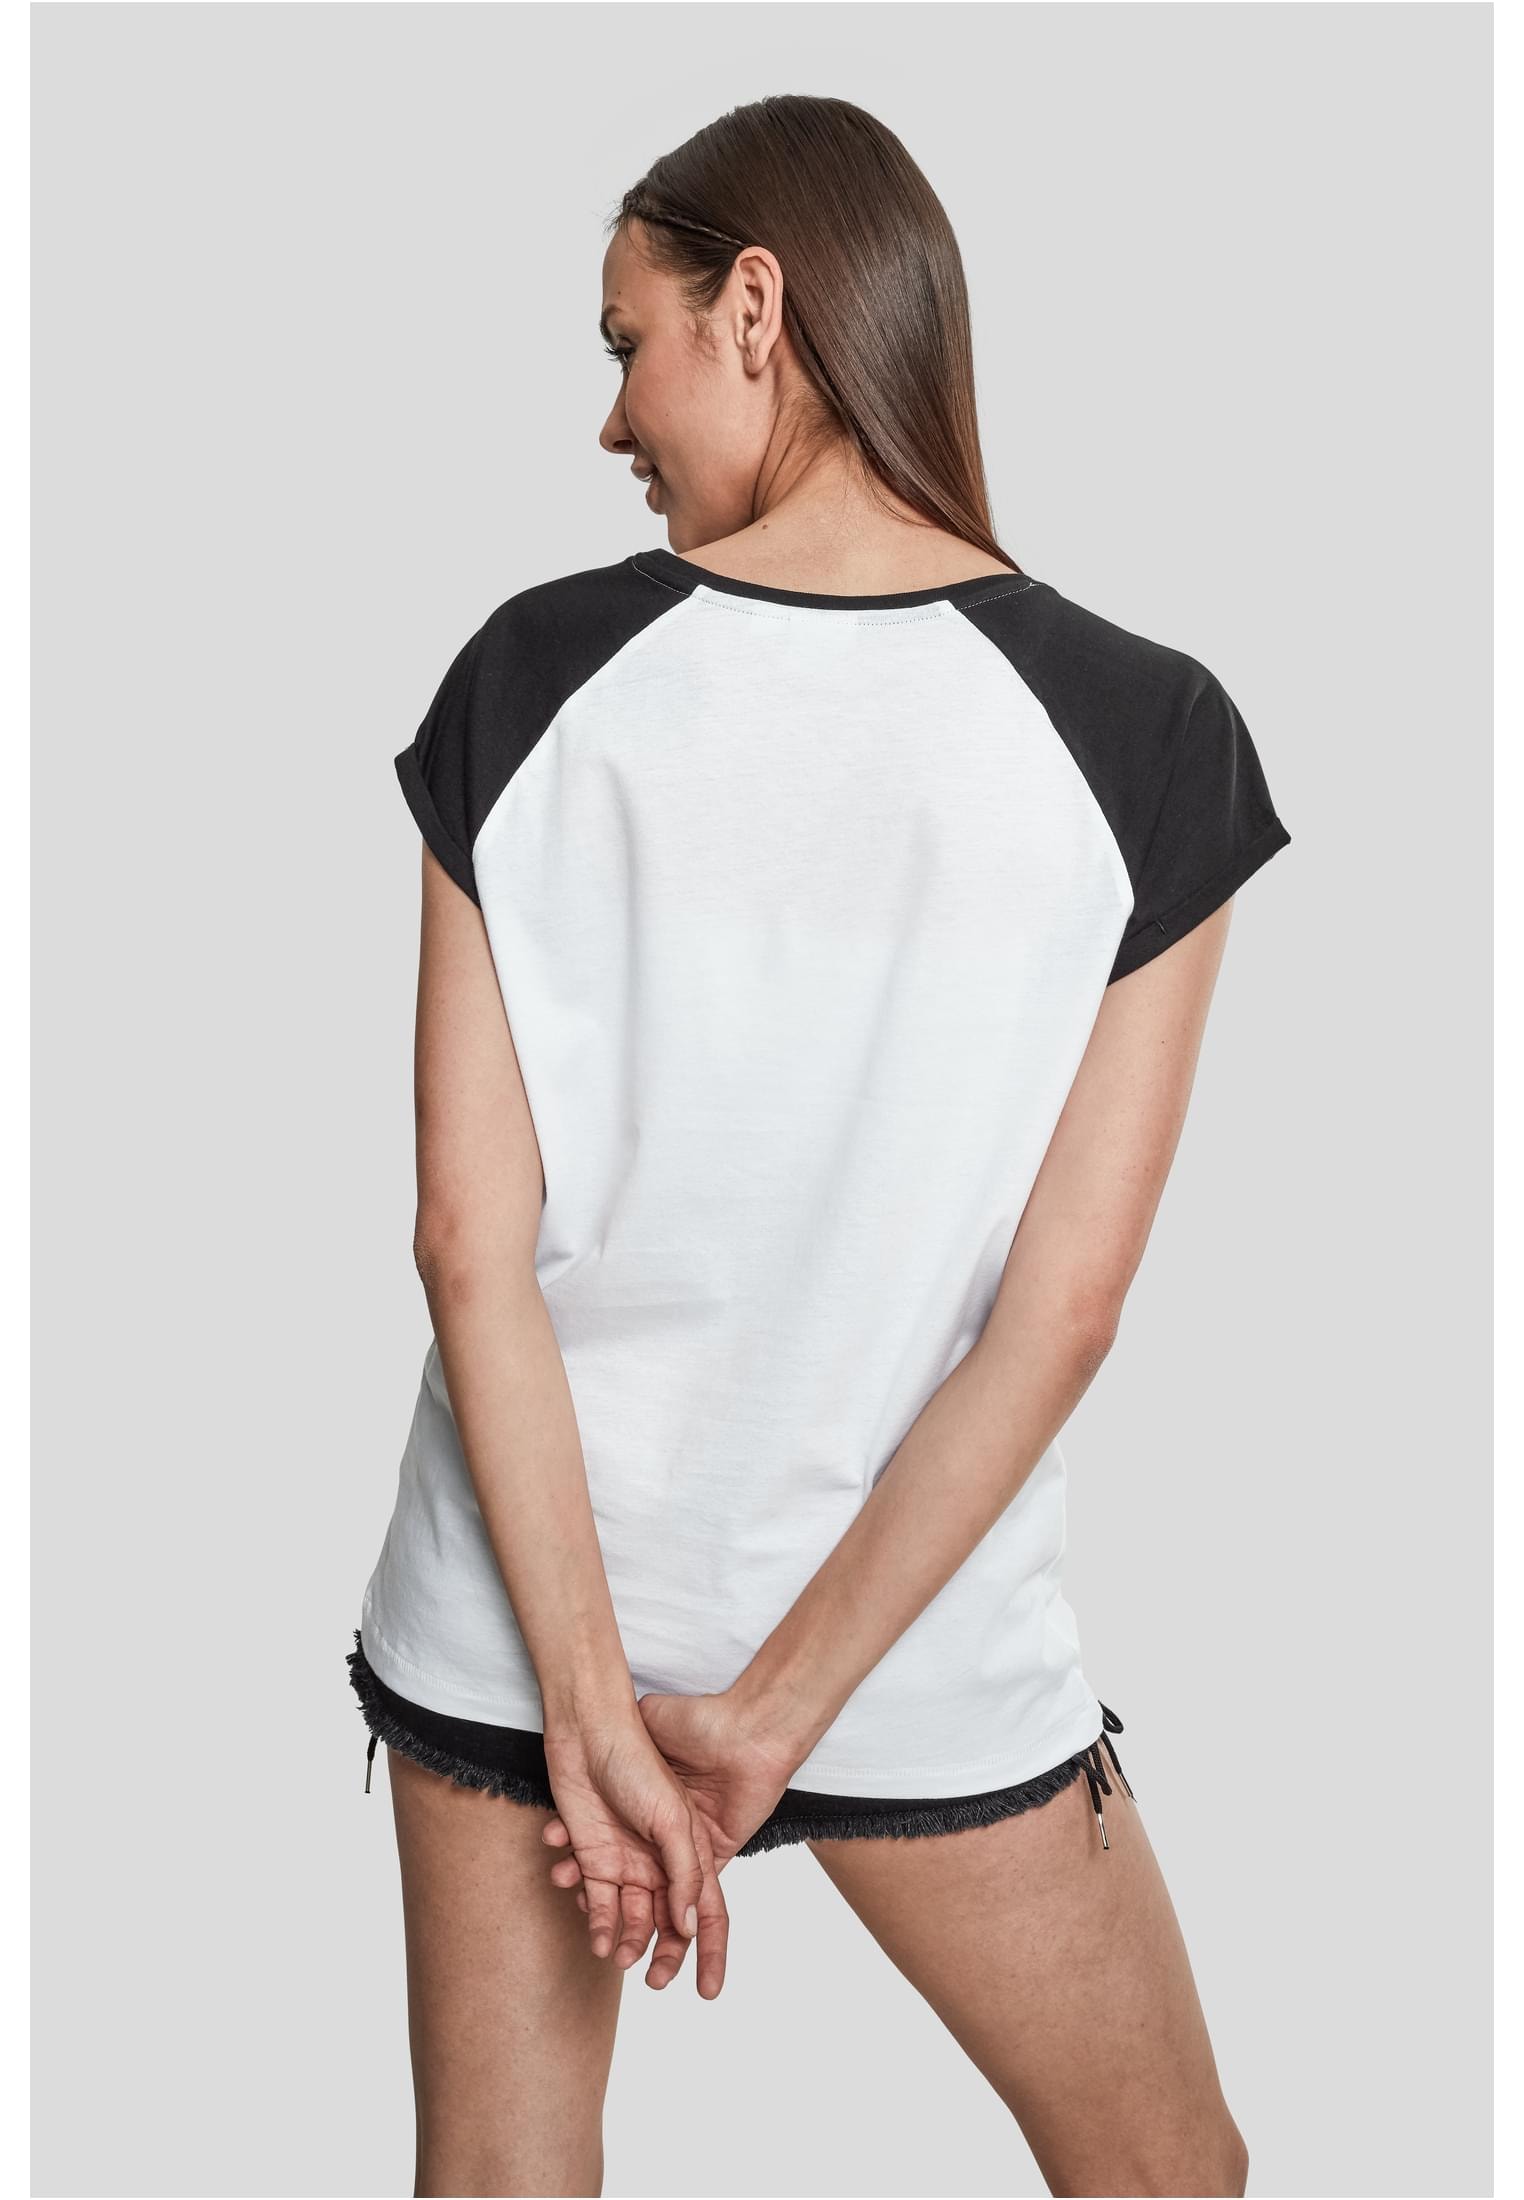 Beliebte Marken URBAN CLASSICS Kurzarmshirt »Damen Ladies (1 online Tee«, tlg.) Raglan kaufen Contrast